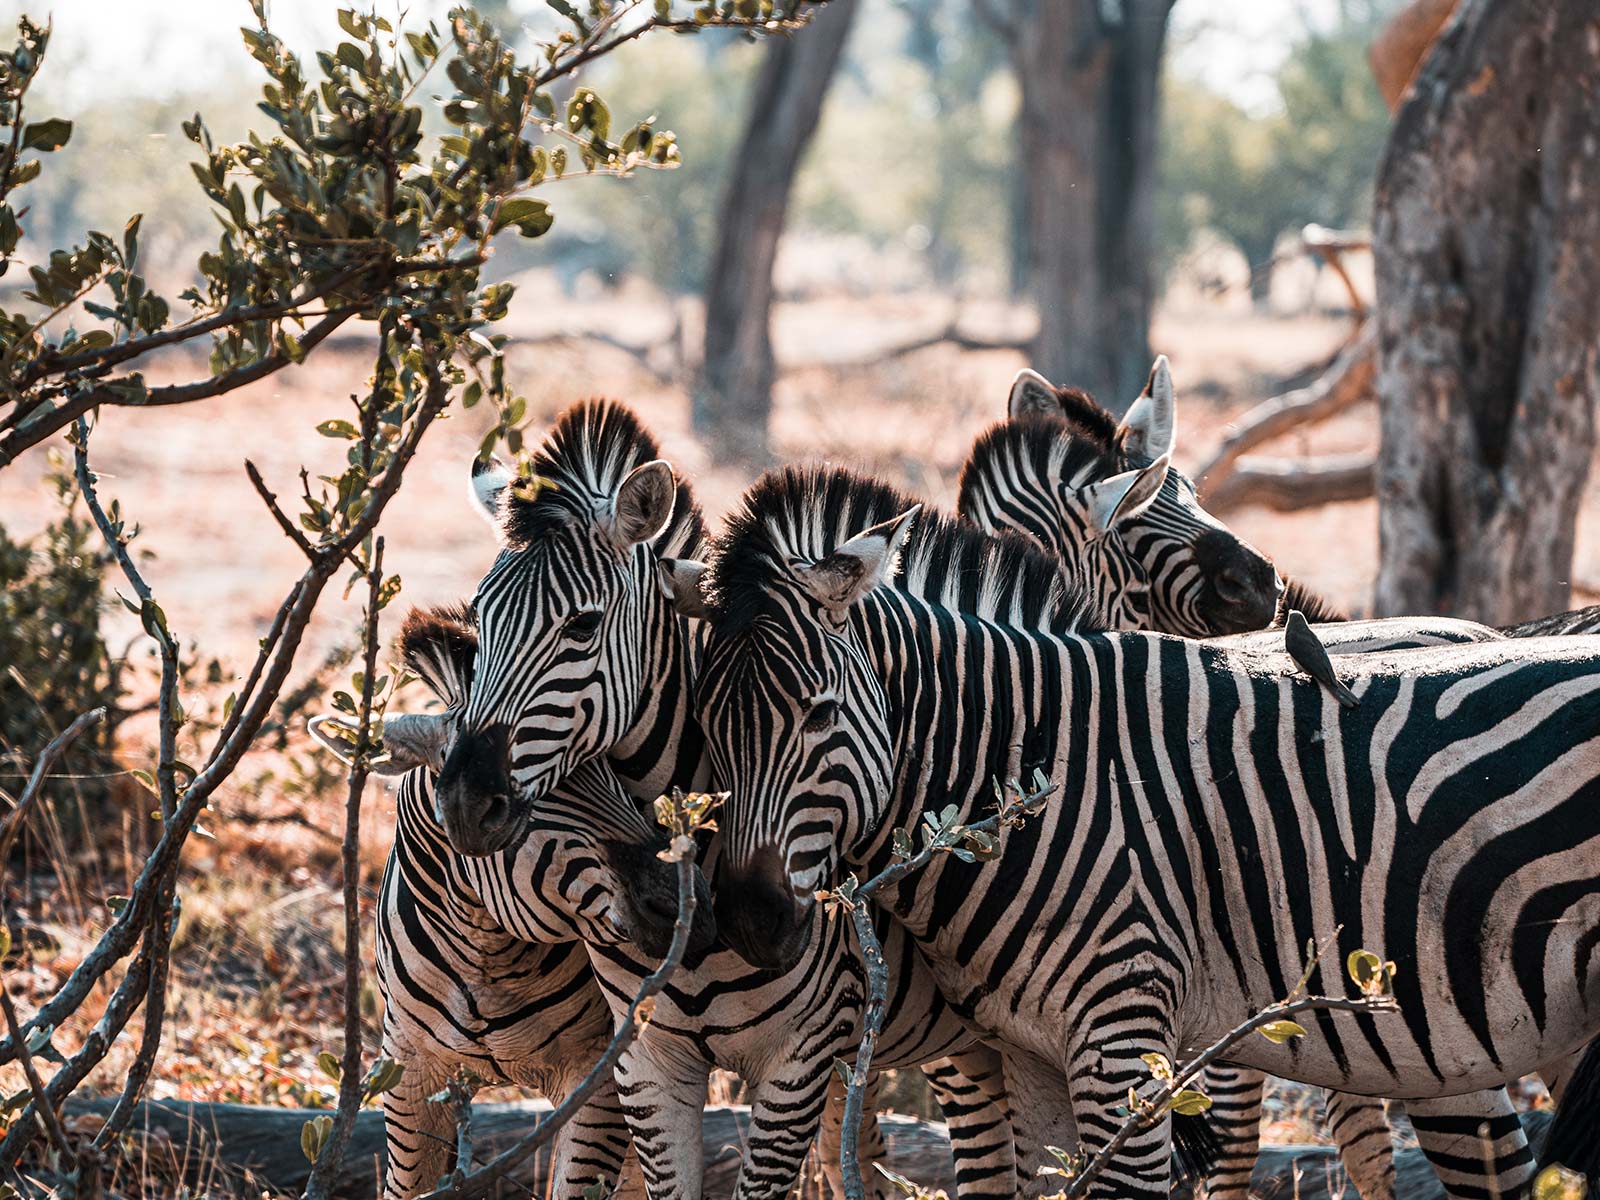 Zebras huddled near trees in Botswana, Africa. My best photos of Botswana